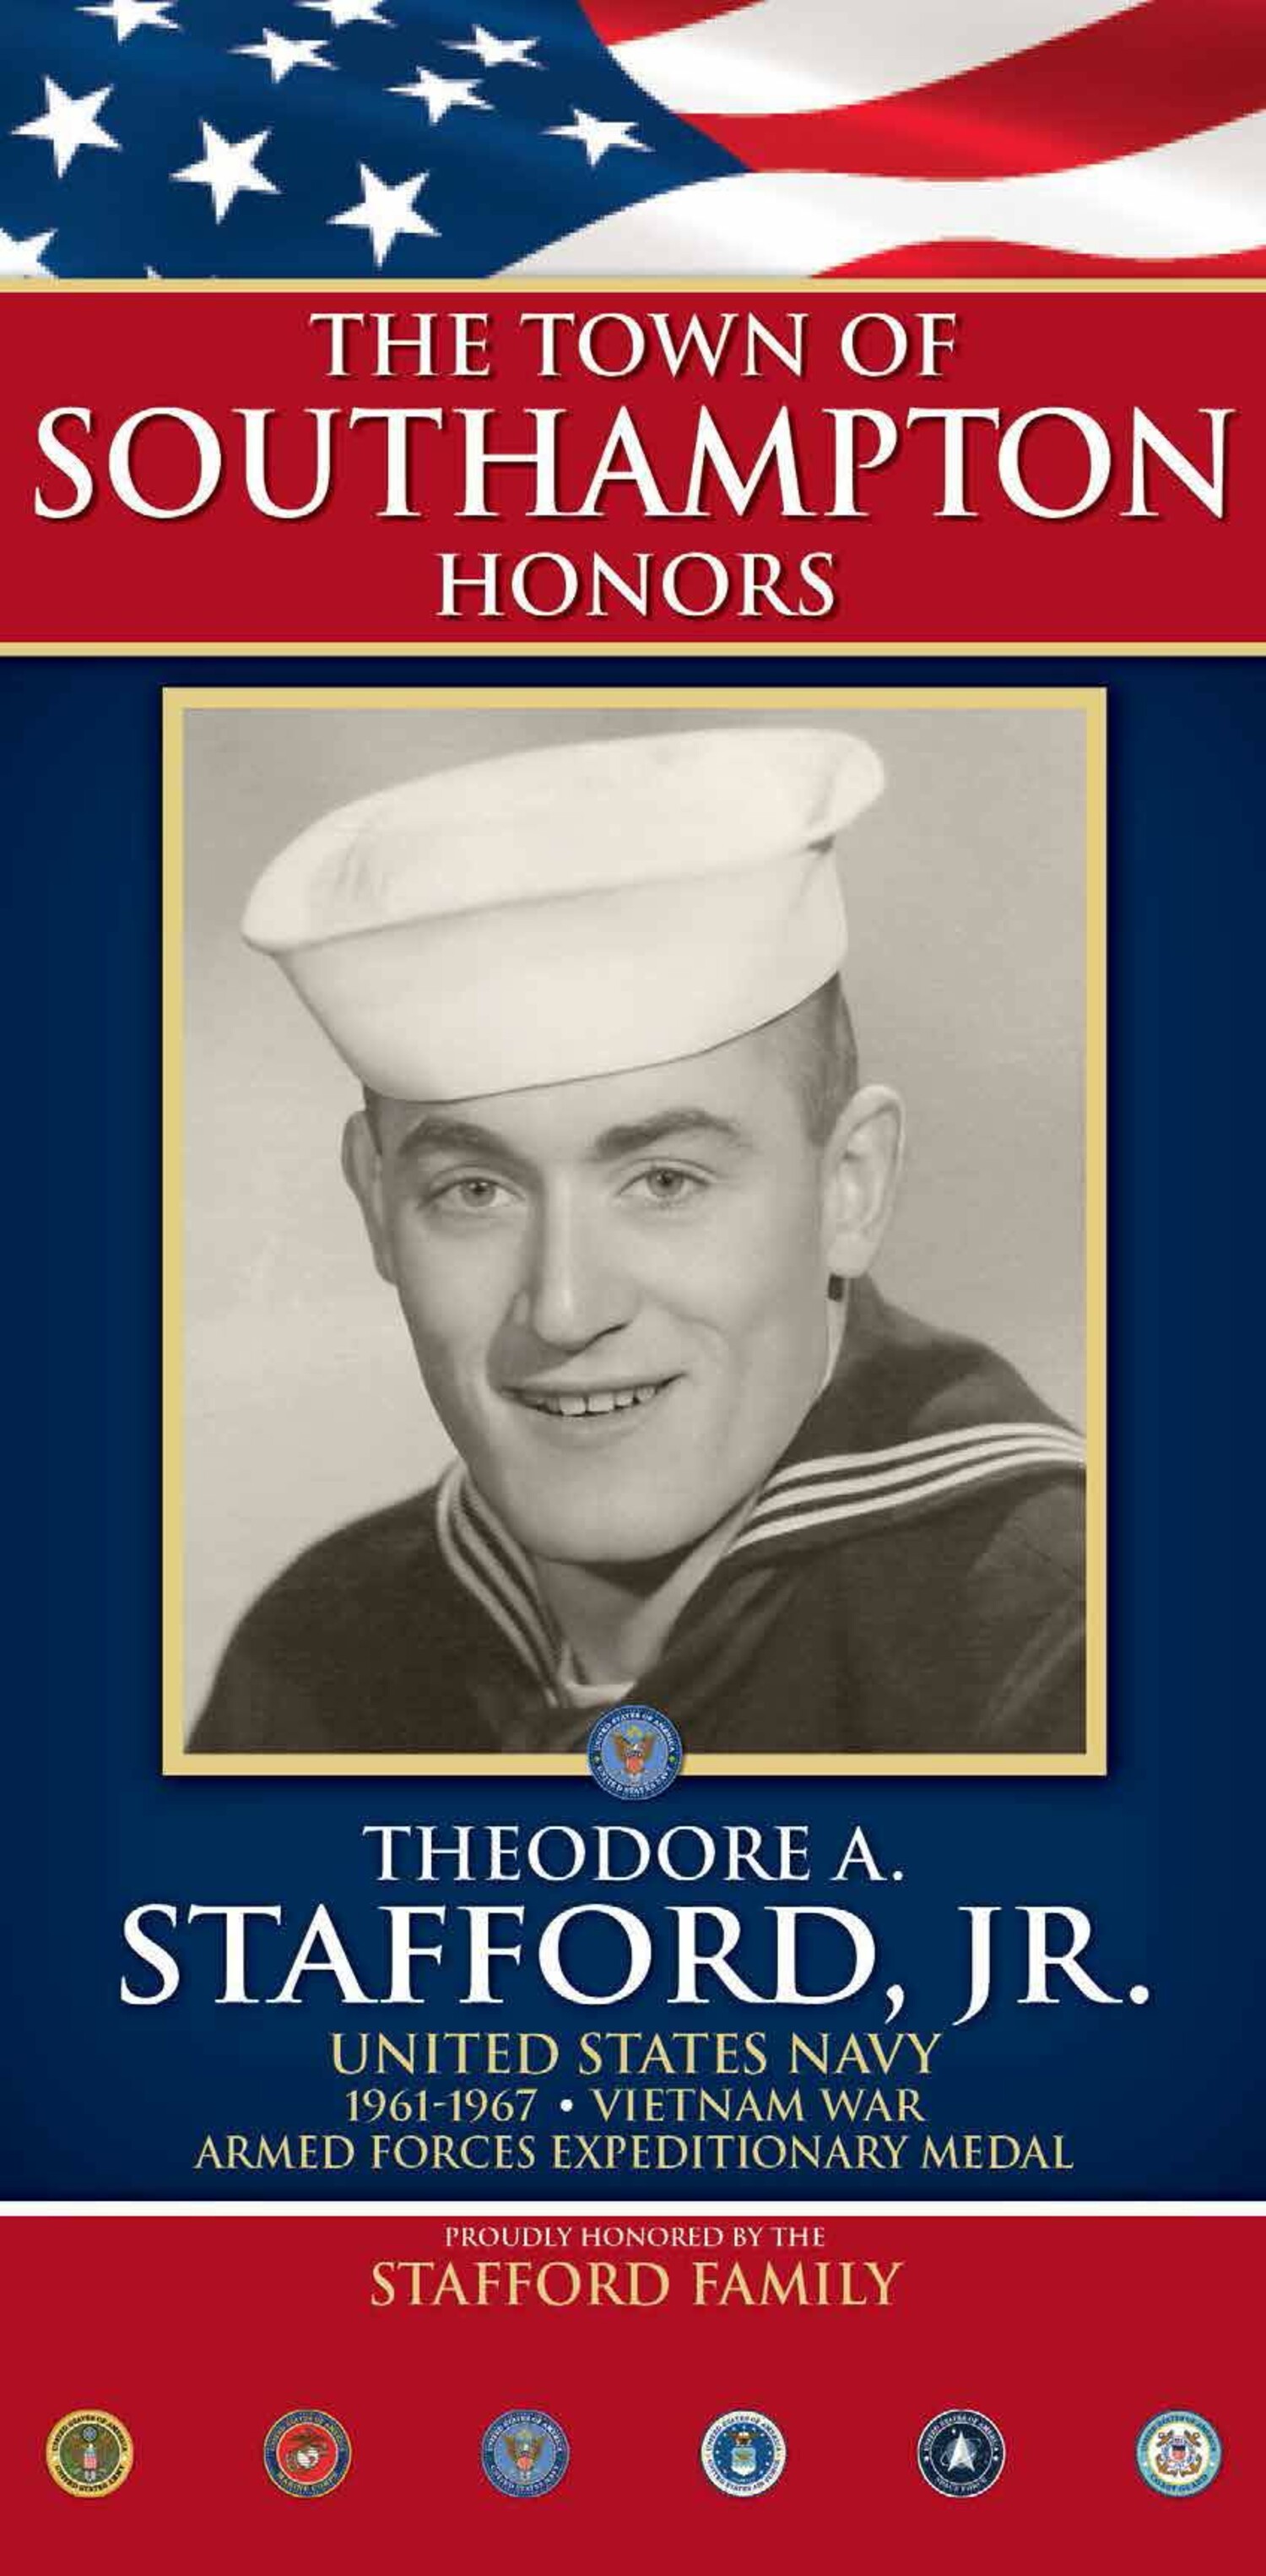 Theodore A. Stafford, Jr.